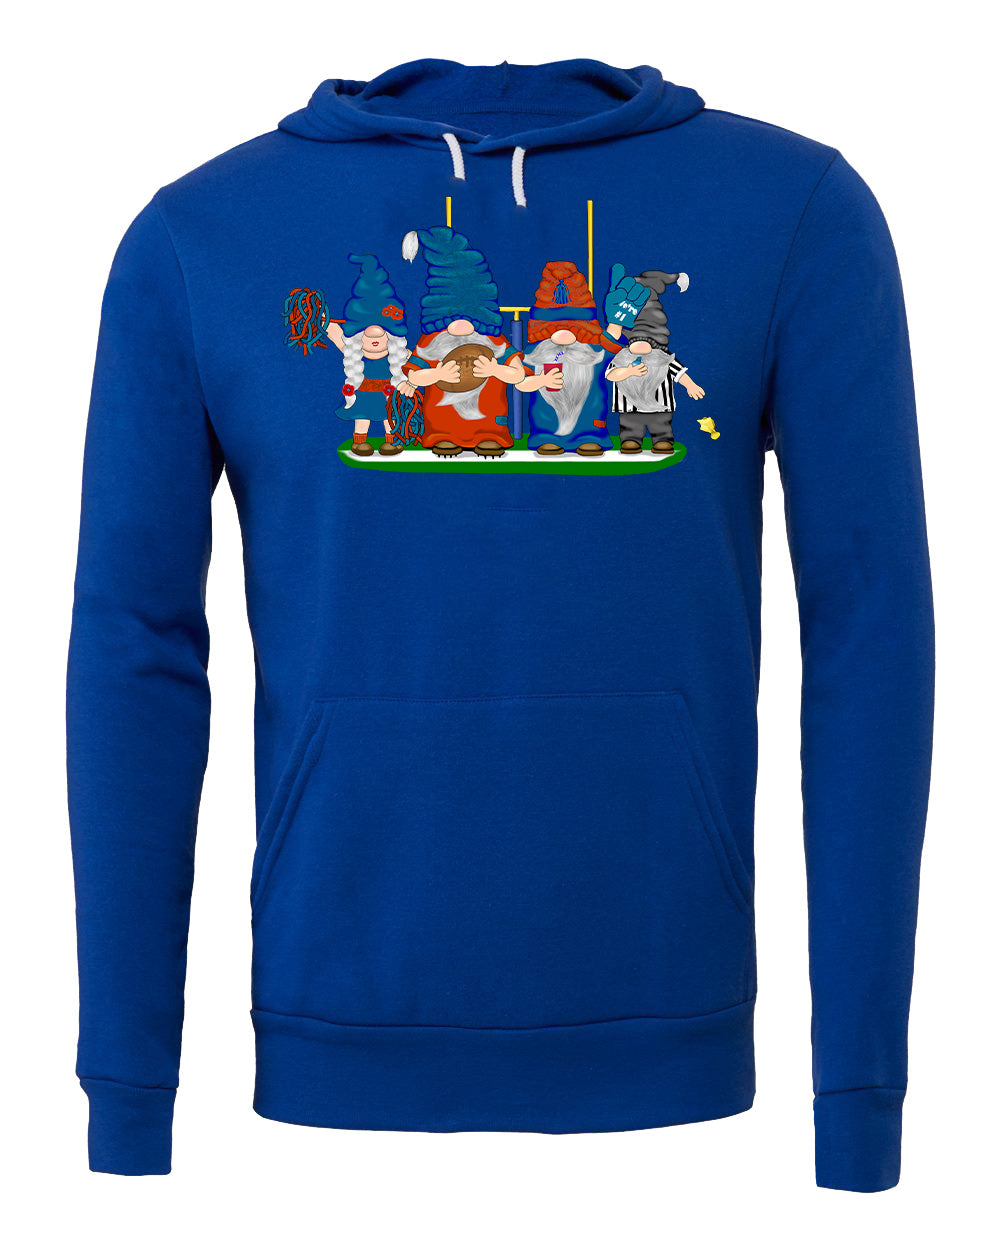 Orange & Blue Football Gnomes (similar to Chicago) on Unisex Hoodie